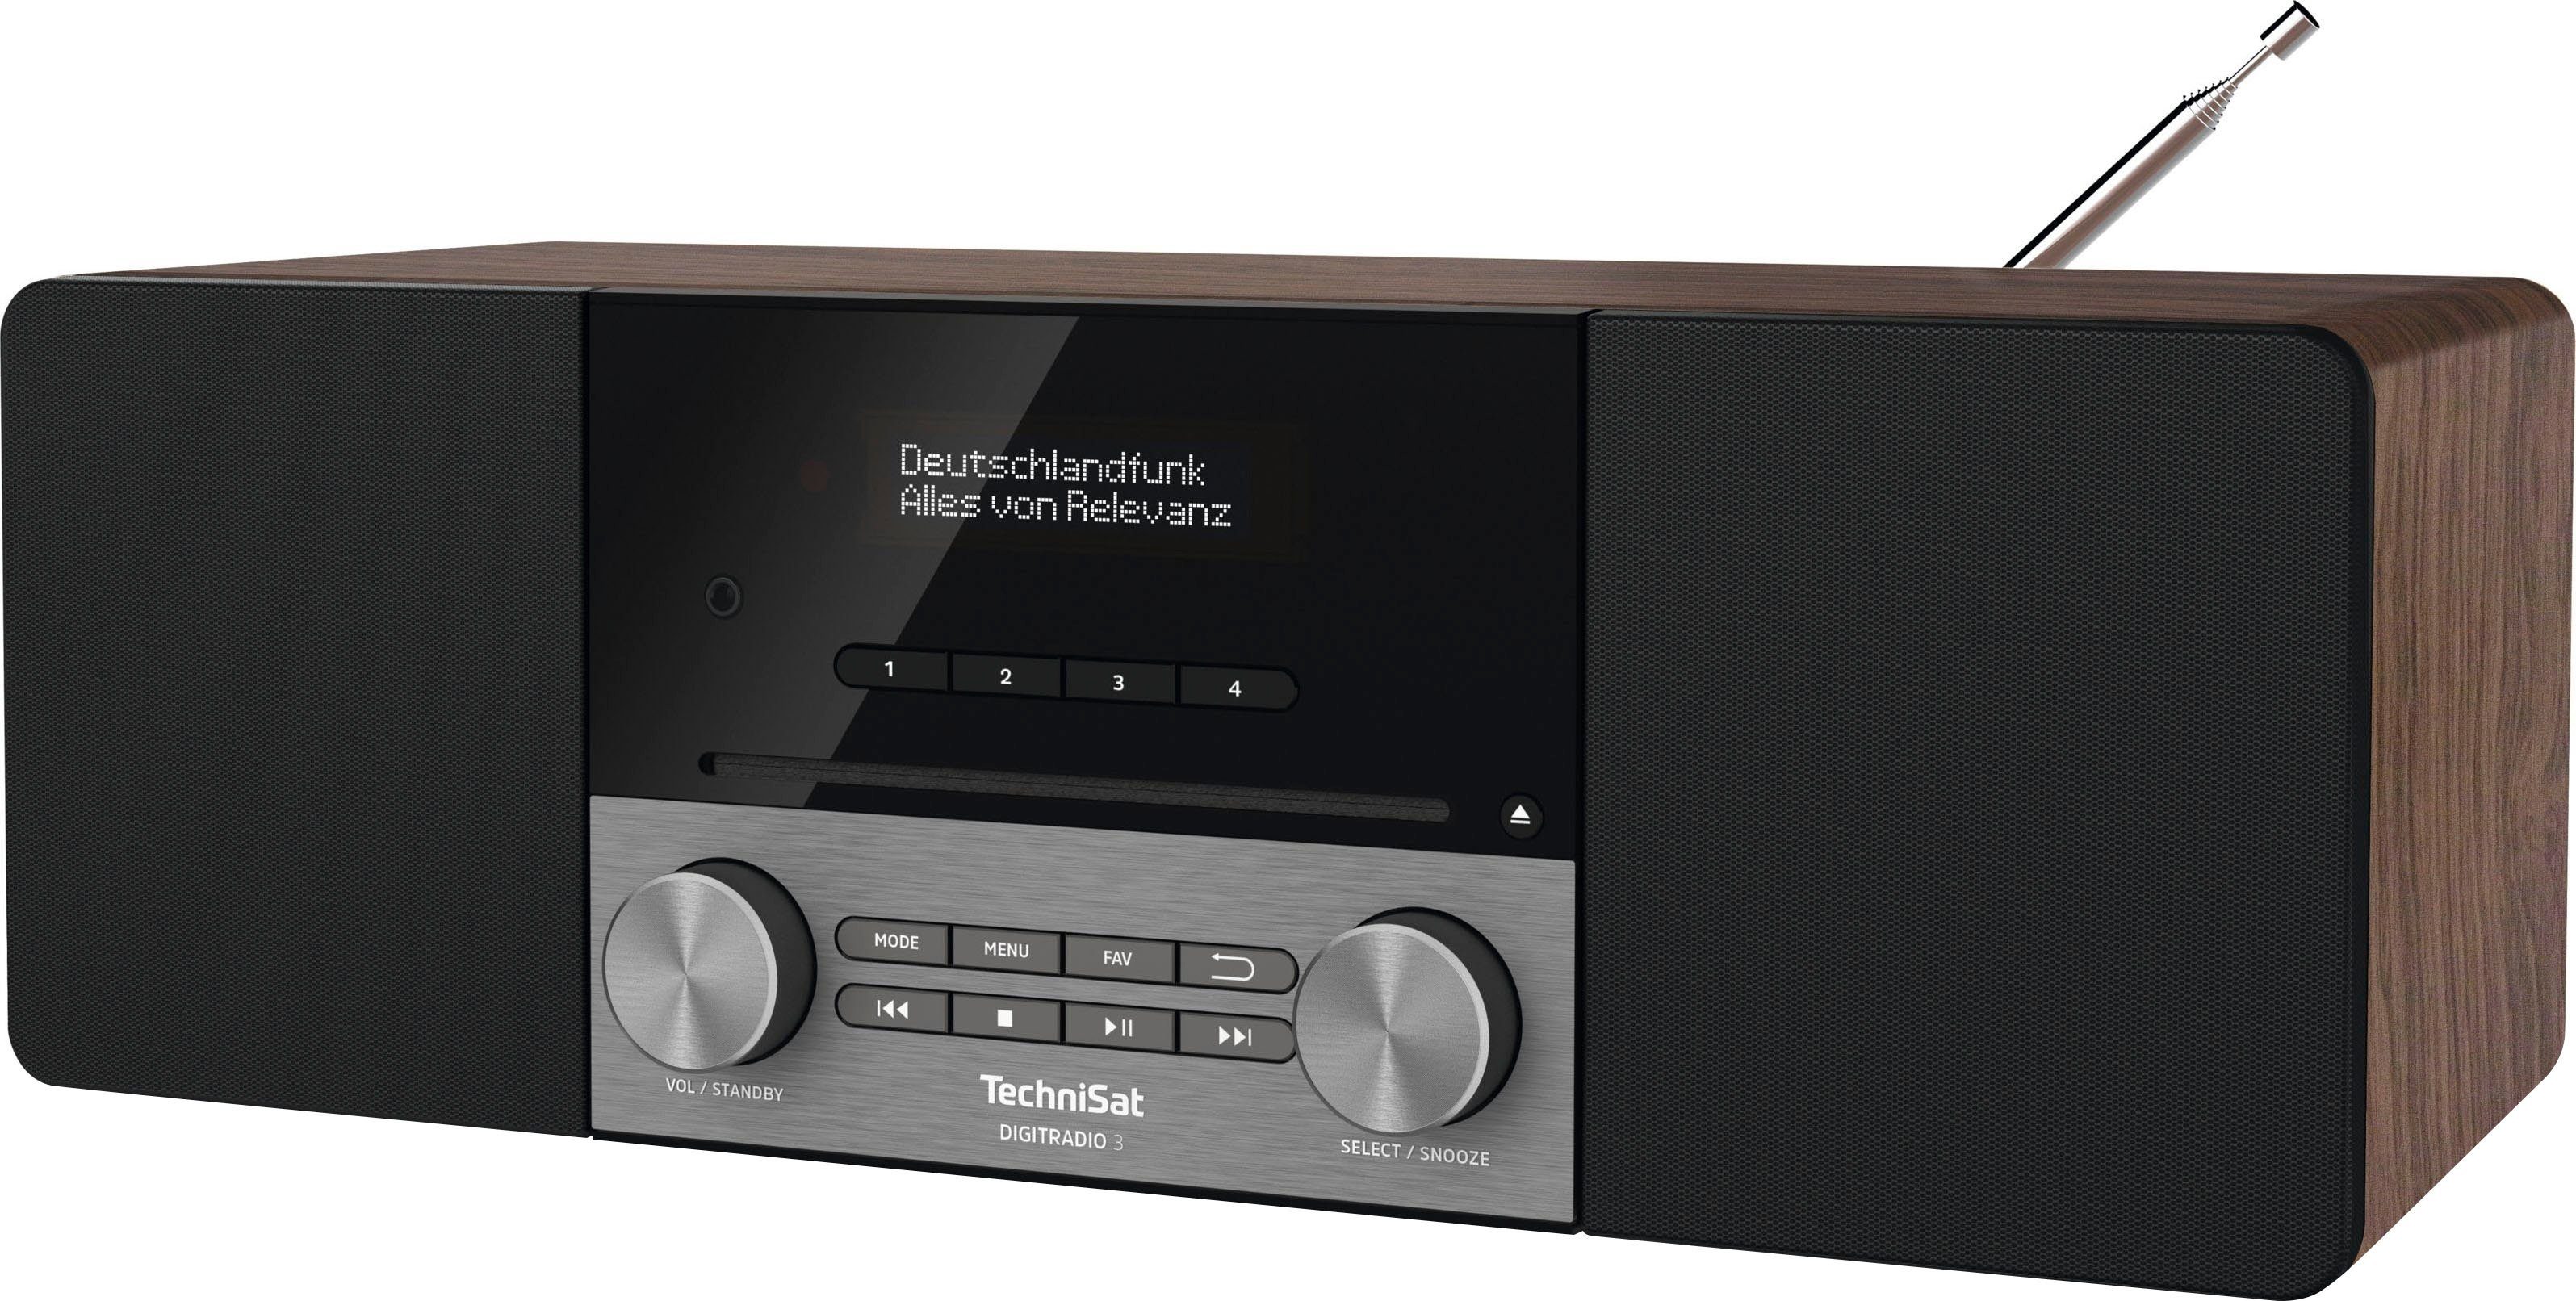 20 TechniSat (DAB) Made in W, UKW (Digitalradio Nussbaum CD-Player, Germany) (DAB), RDS, mit 3 DIGITRADIO Digitalradio